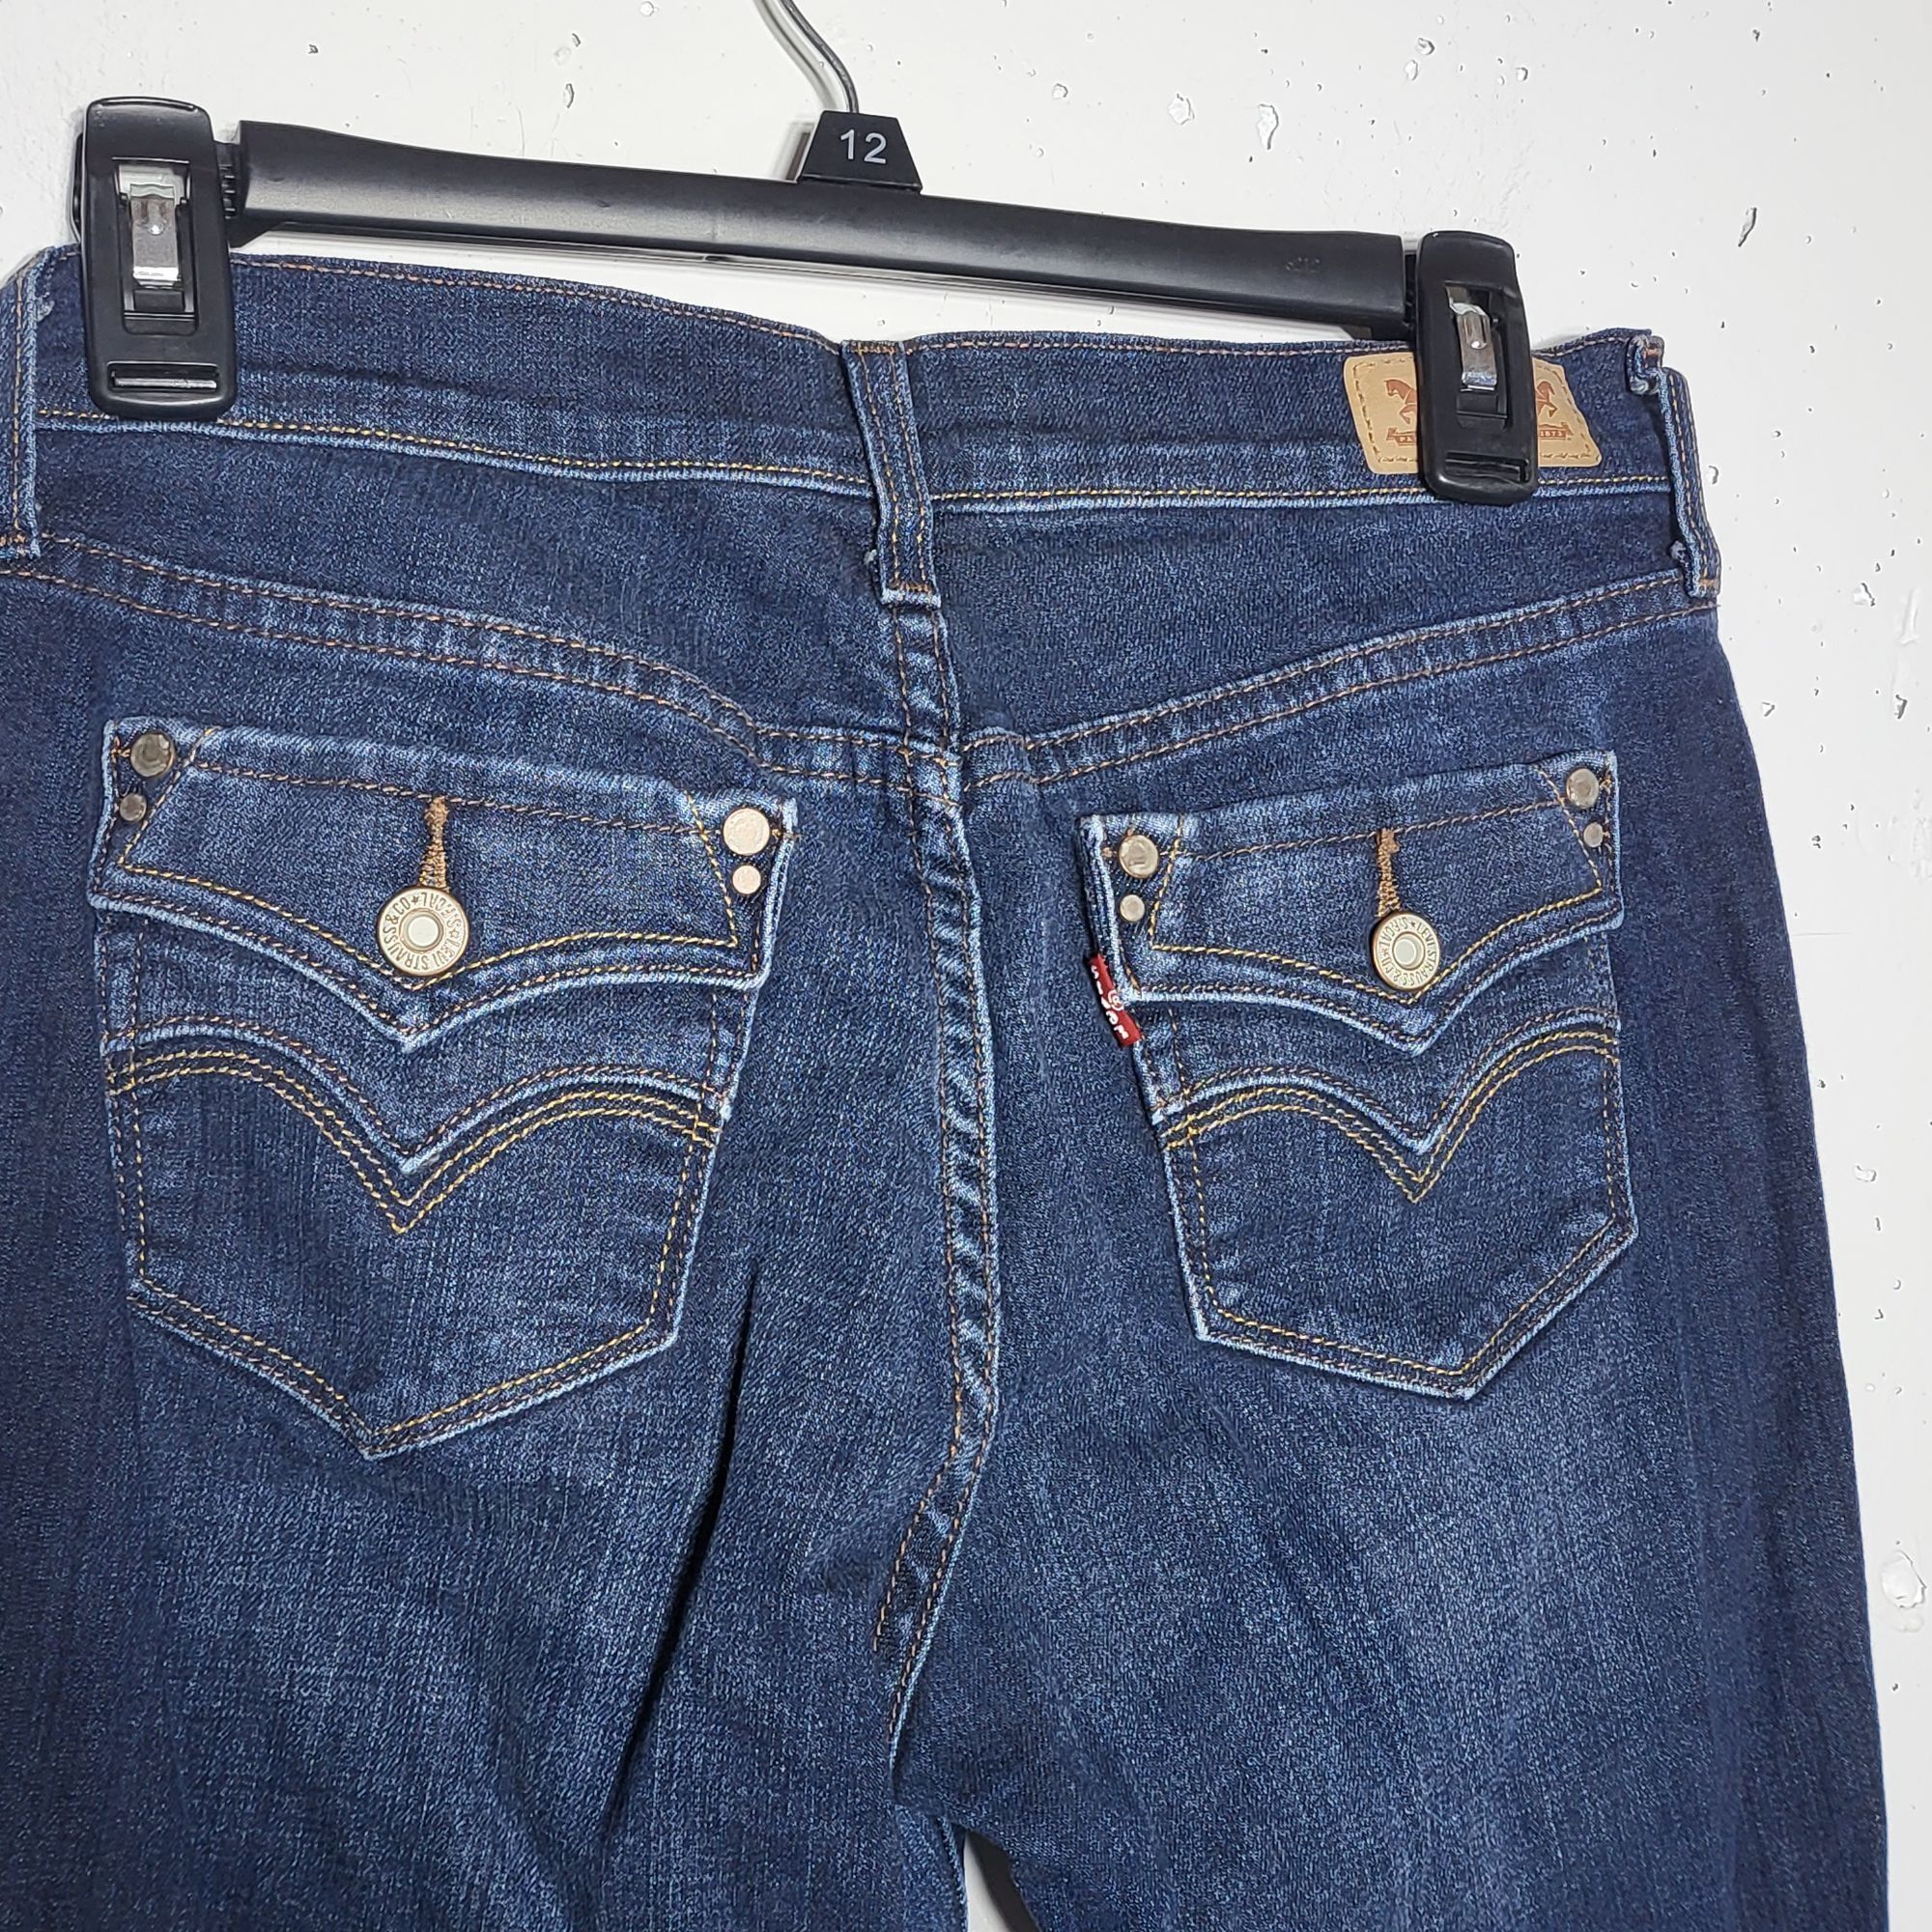 Levi's Levi's 505 Straight Leg Denim Blue Jeans Women's Size 27/30 Size 27" / US 4 / IT 40 - 5 Thumbnail